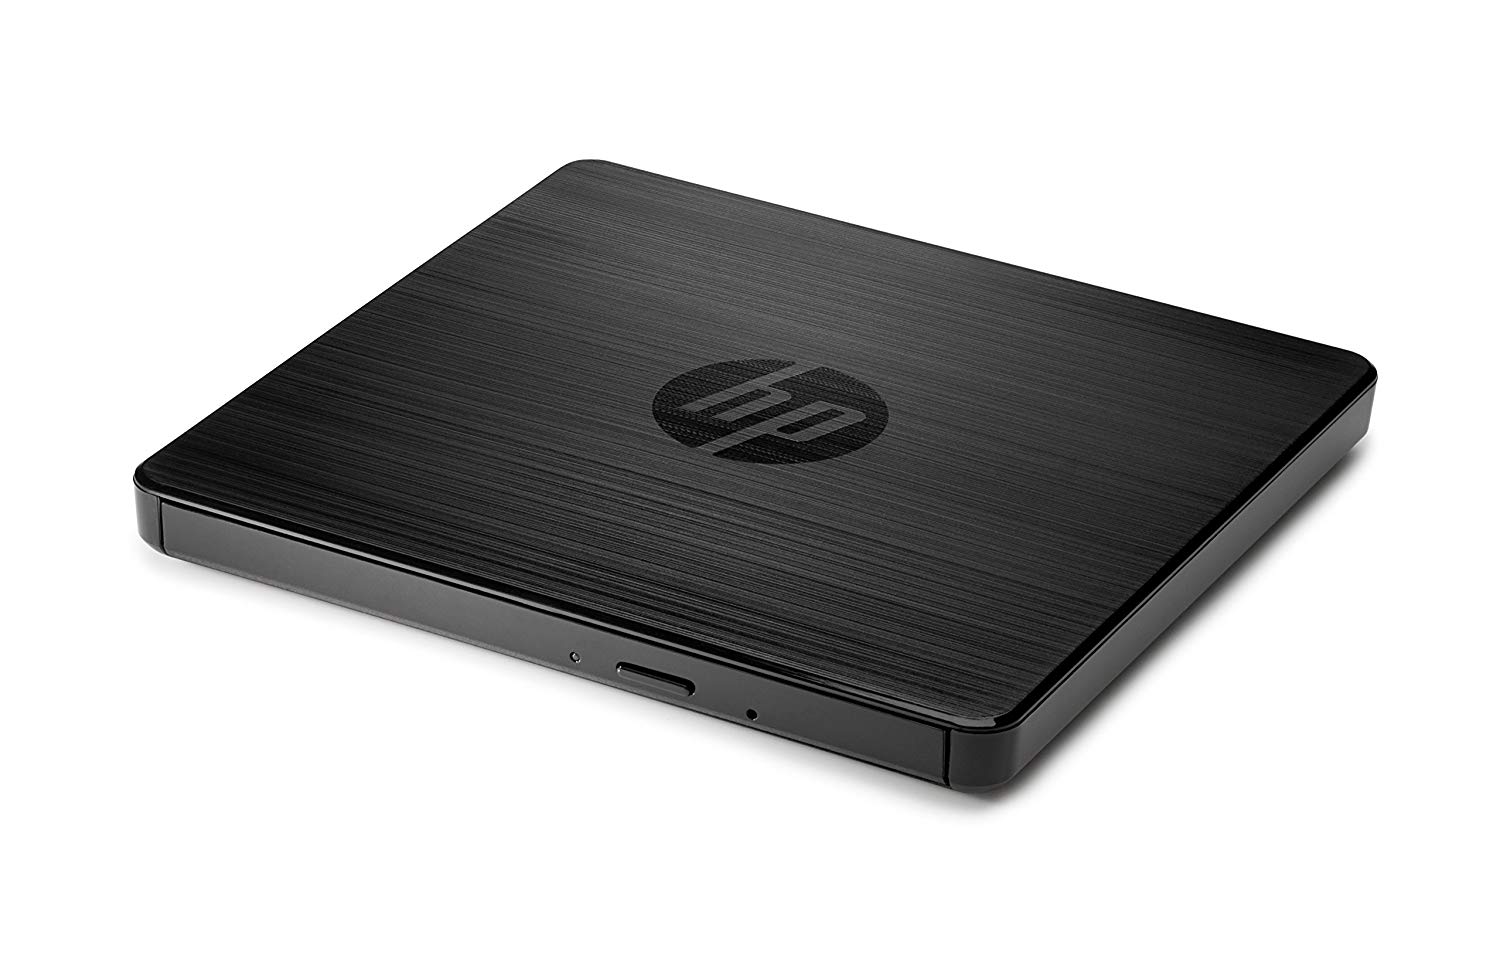 HP 8x Ultra Slim Portable External USB ODD DVDRW Burner Re-Writer Drive No AC Adapter Required PC Mac Notebook Laptop Computer